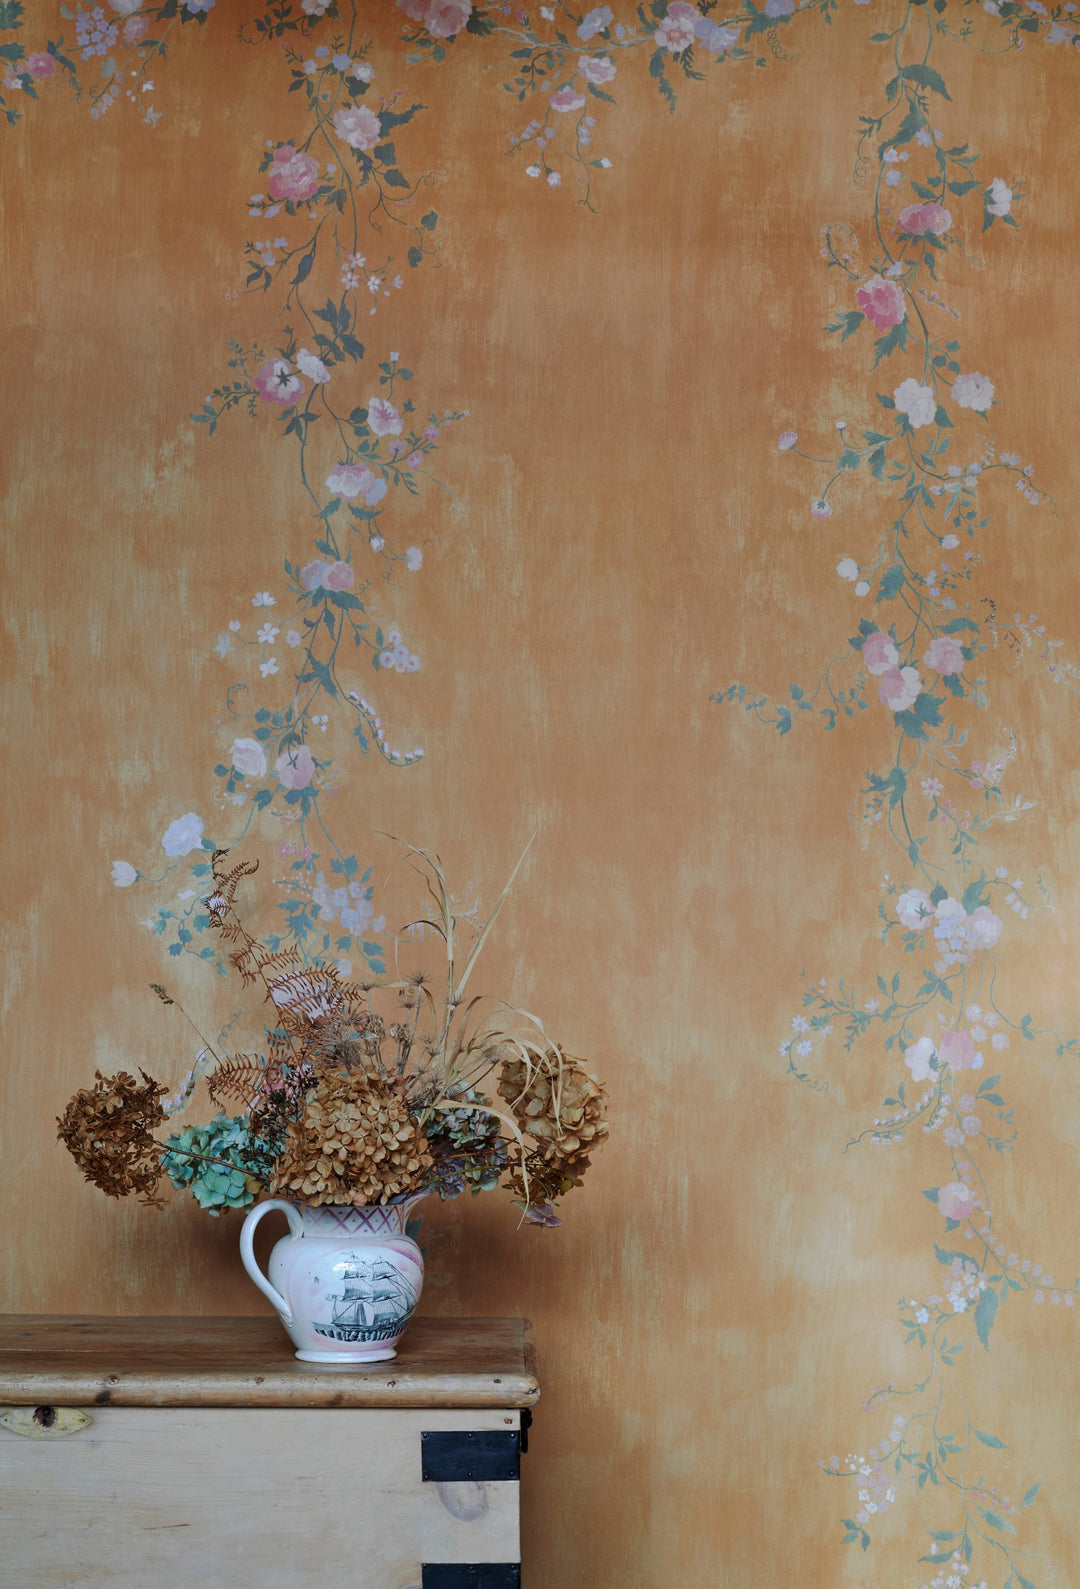 Floral-Roberts-Hamilton-Weston-wallpaper-trailing-flowers-Garland-hand-illustrated-panel-walls-mural-floral-Garland-painterly-tobacco-04